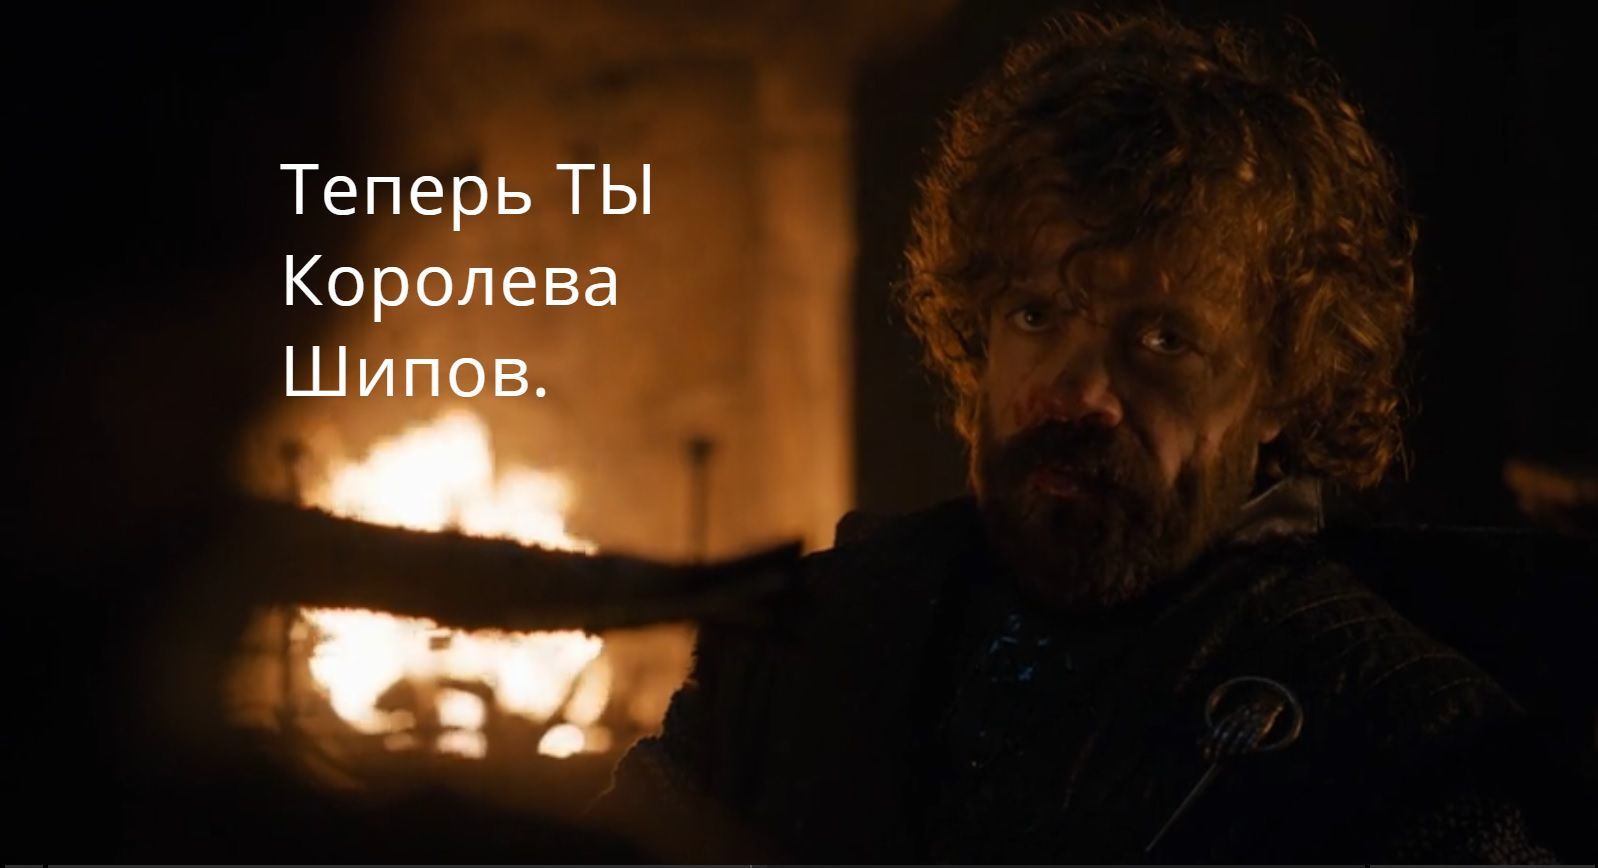 Mercenary Career - Game of Thrones, Bronn, Tyrion Lannister, Game of Thrones season 8, Longpost